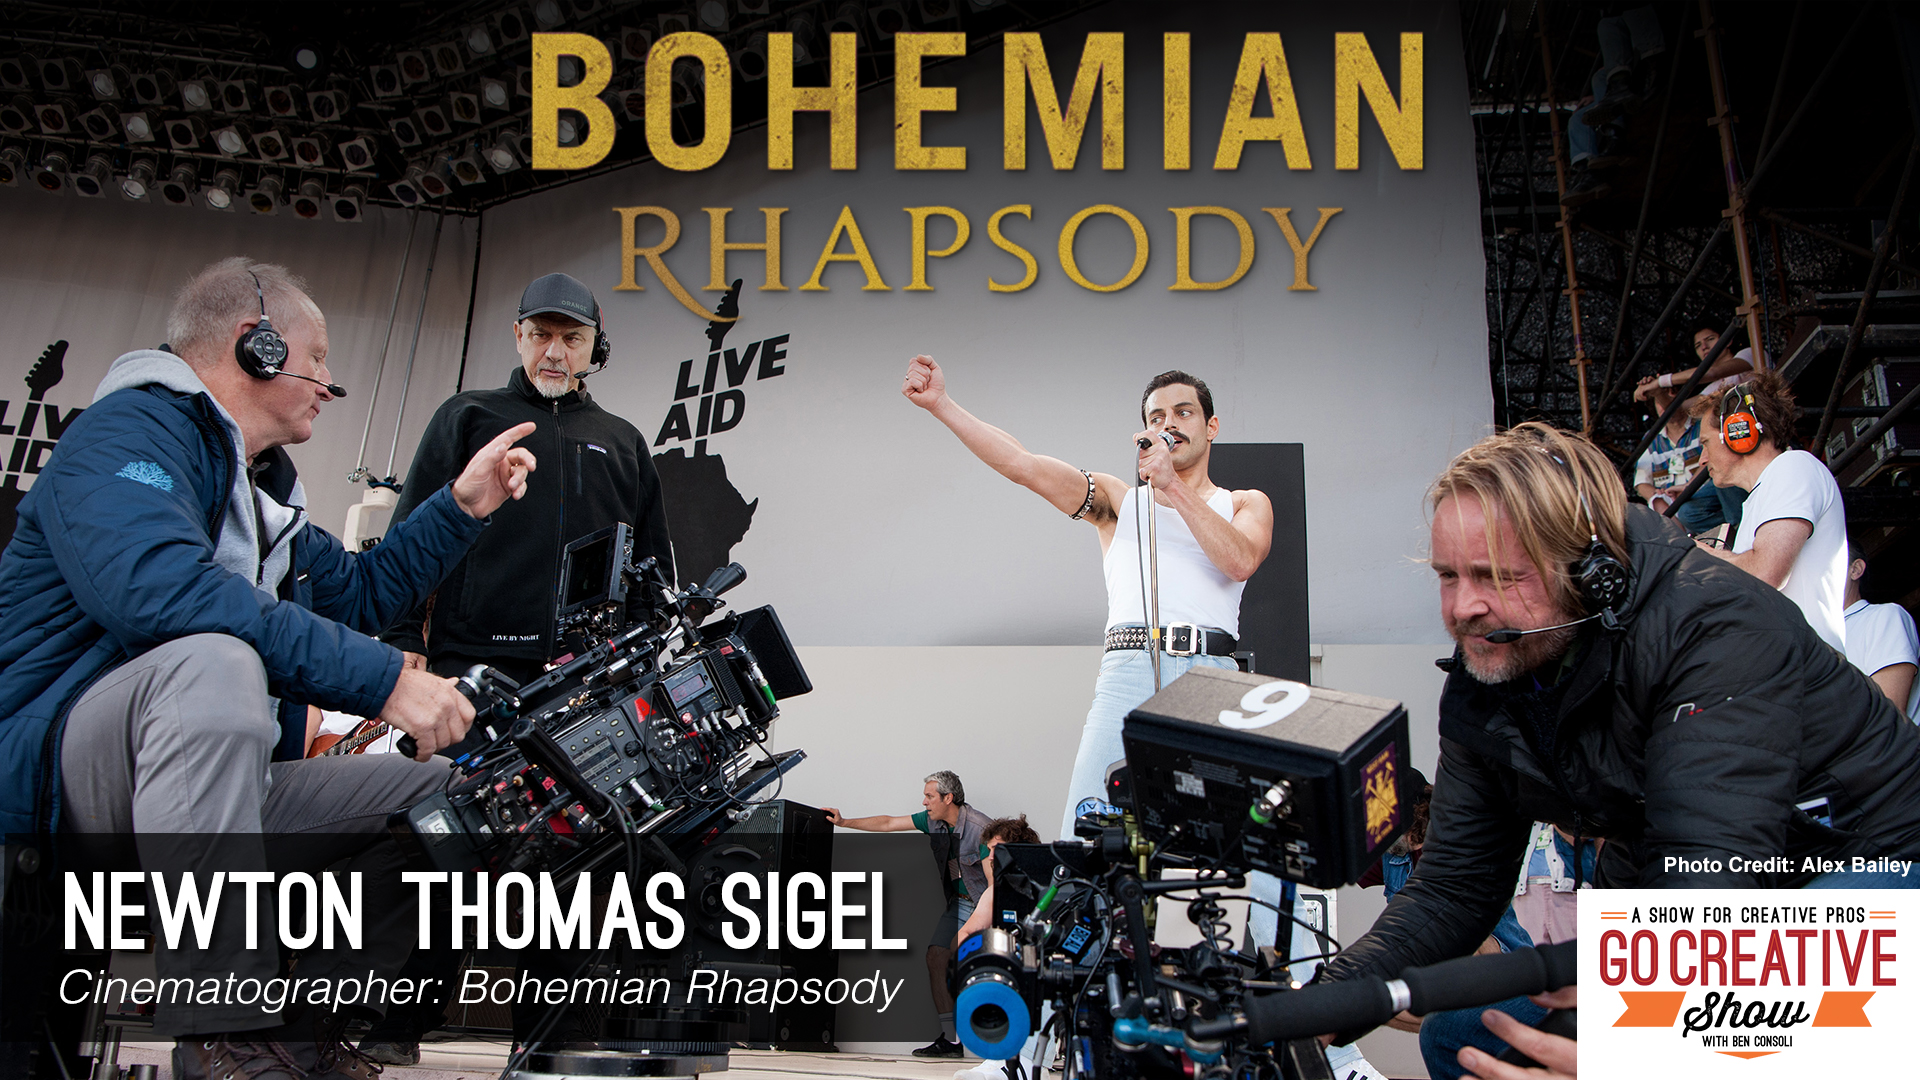 Bohemian Rhapsody cinematographer Newton Thomas Sigel on Go Creative Show with Ben Consoli